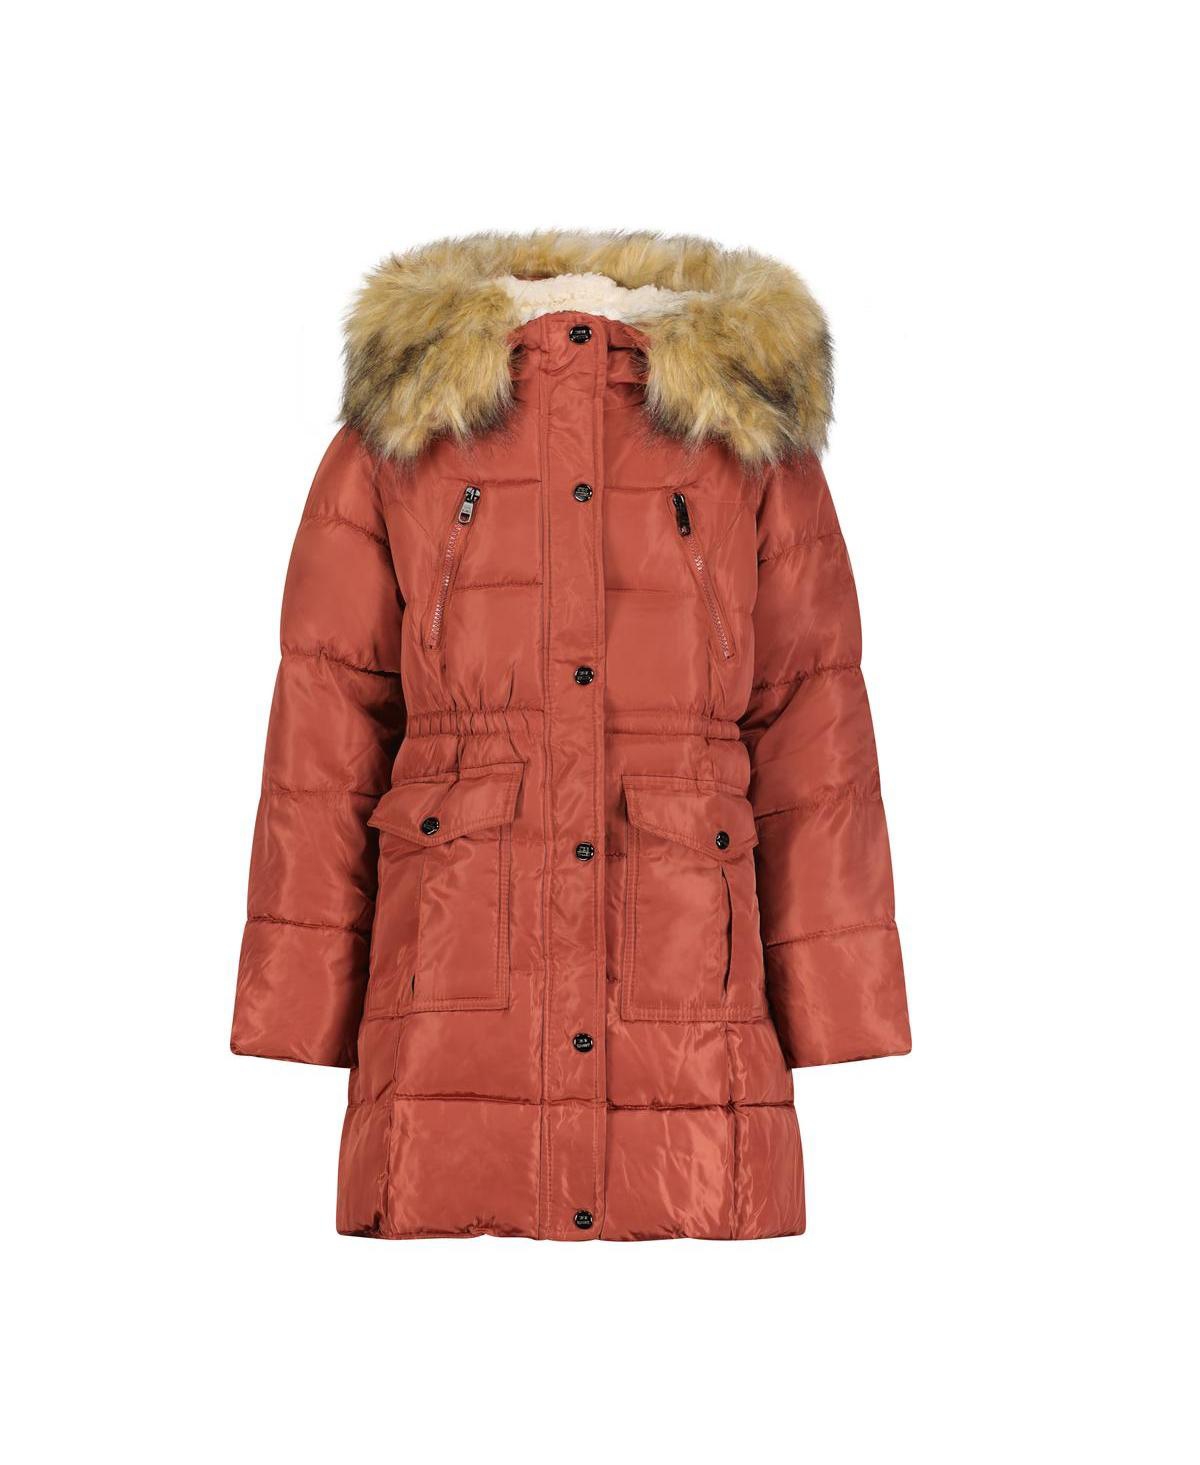 Steve Madden Girls Faux Fur Trim Warm Winter Parka Coat With Cinch ...